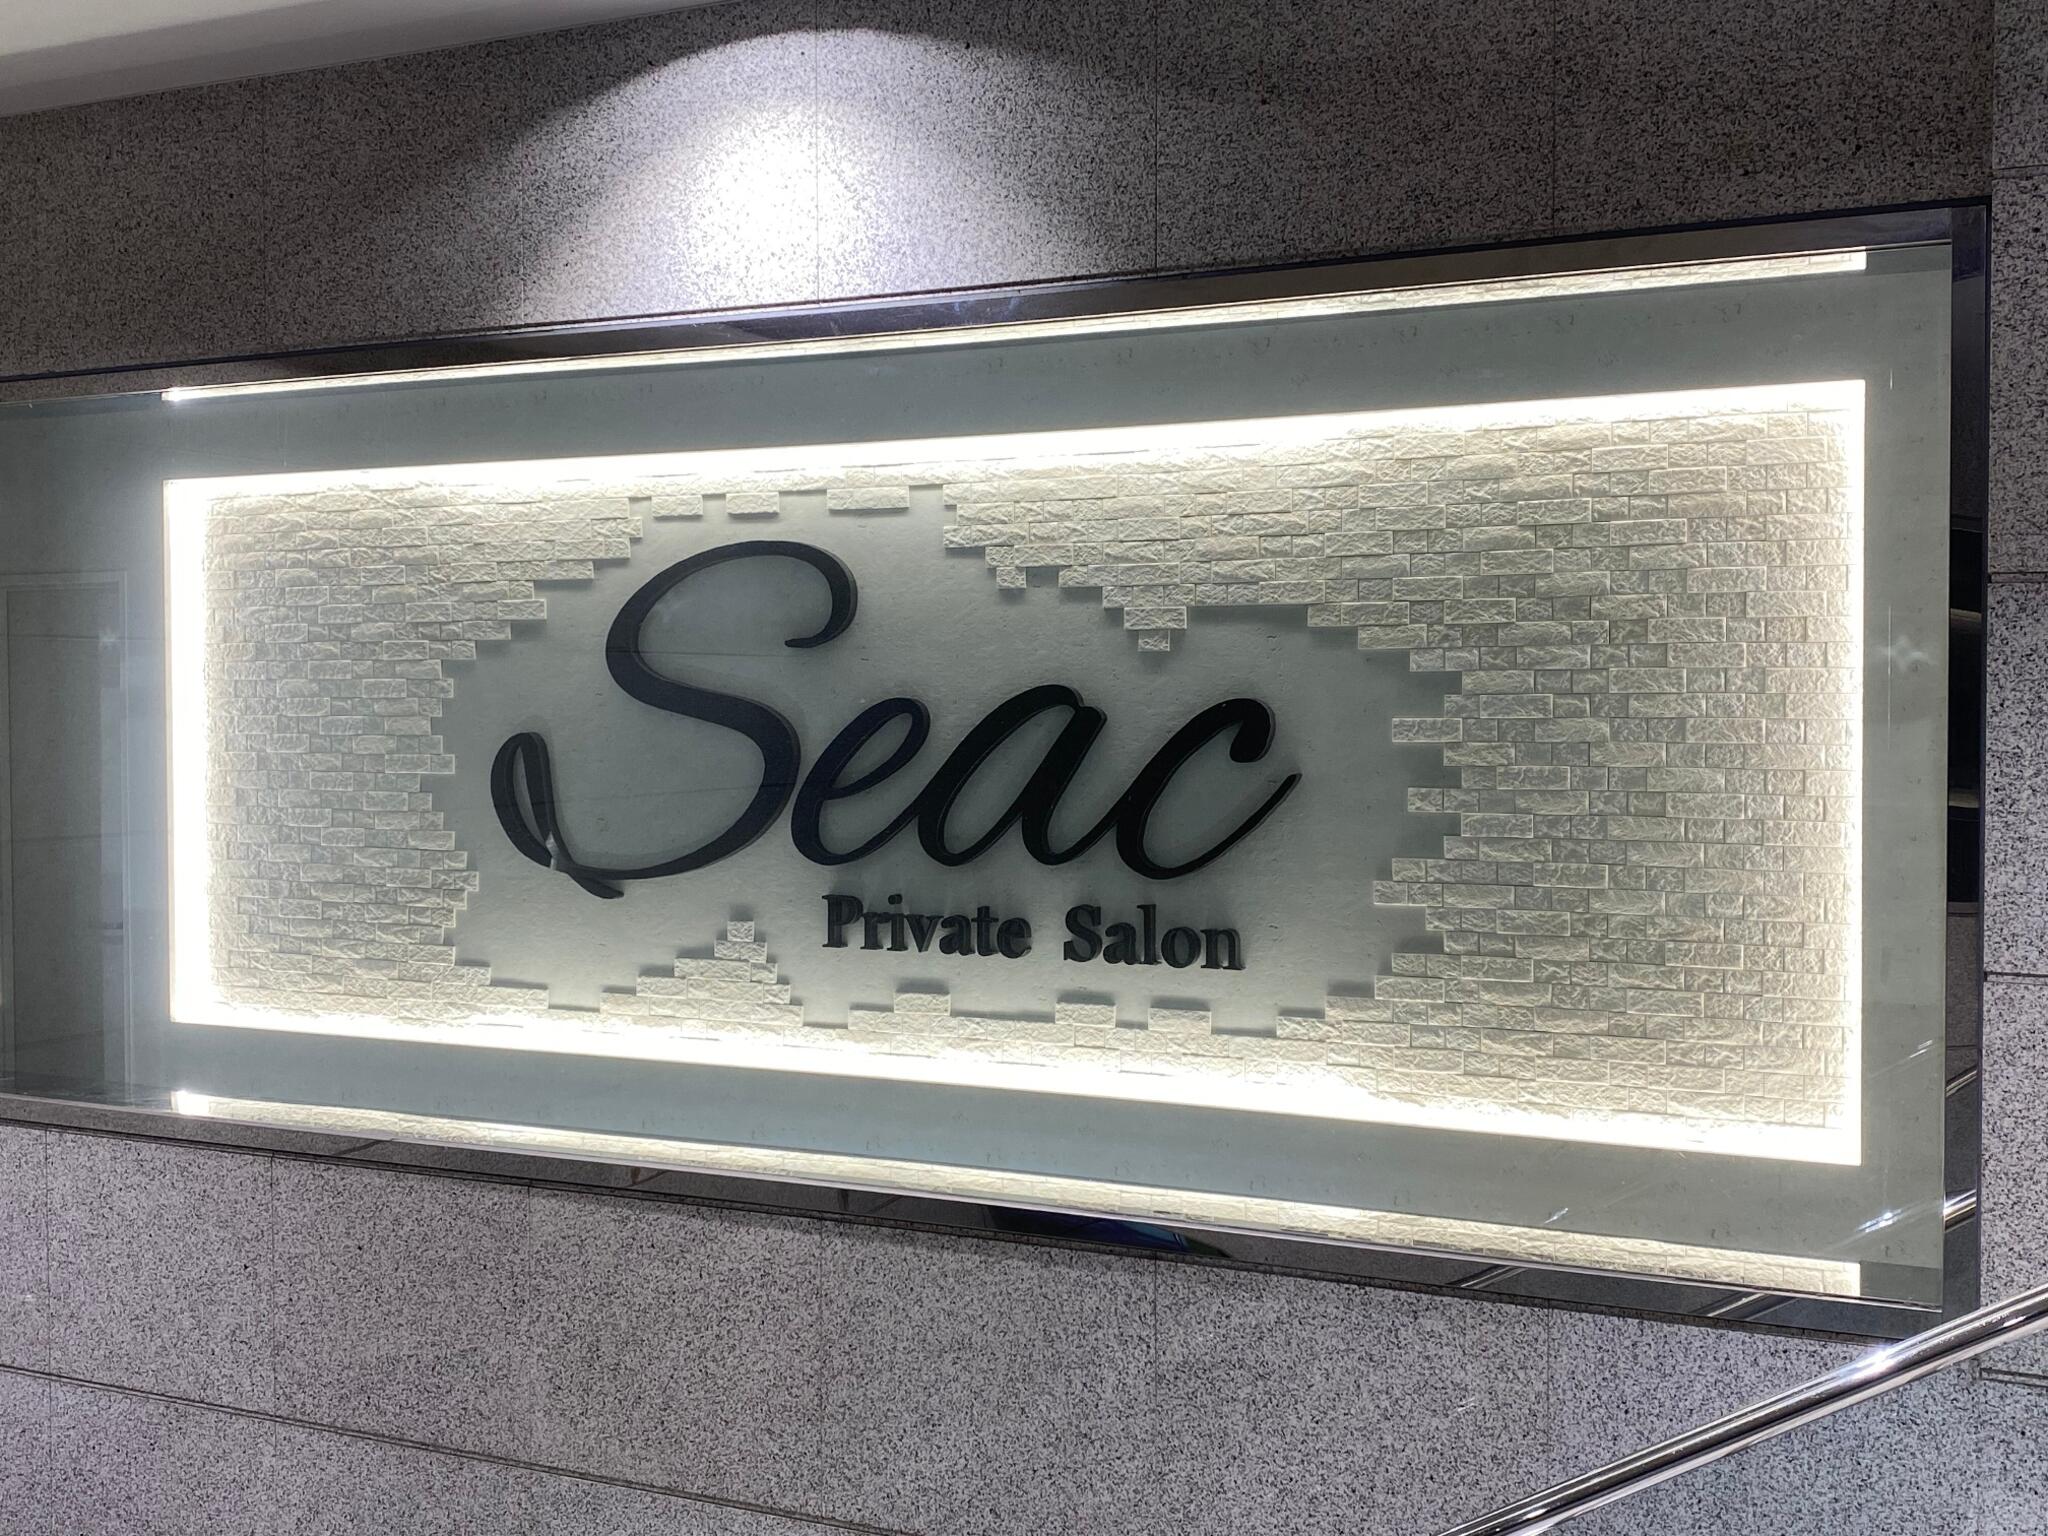 Seac Private Salonの代表写真5